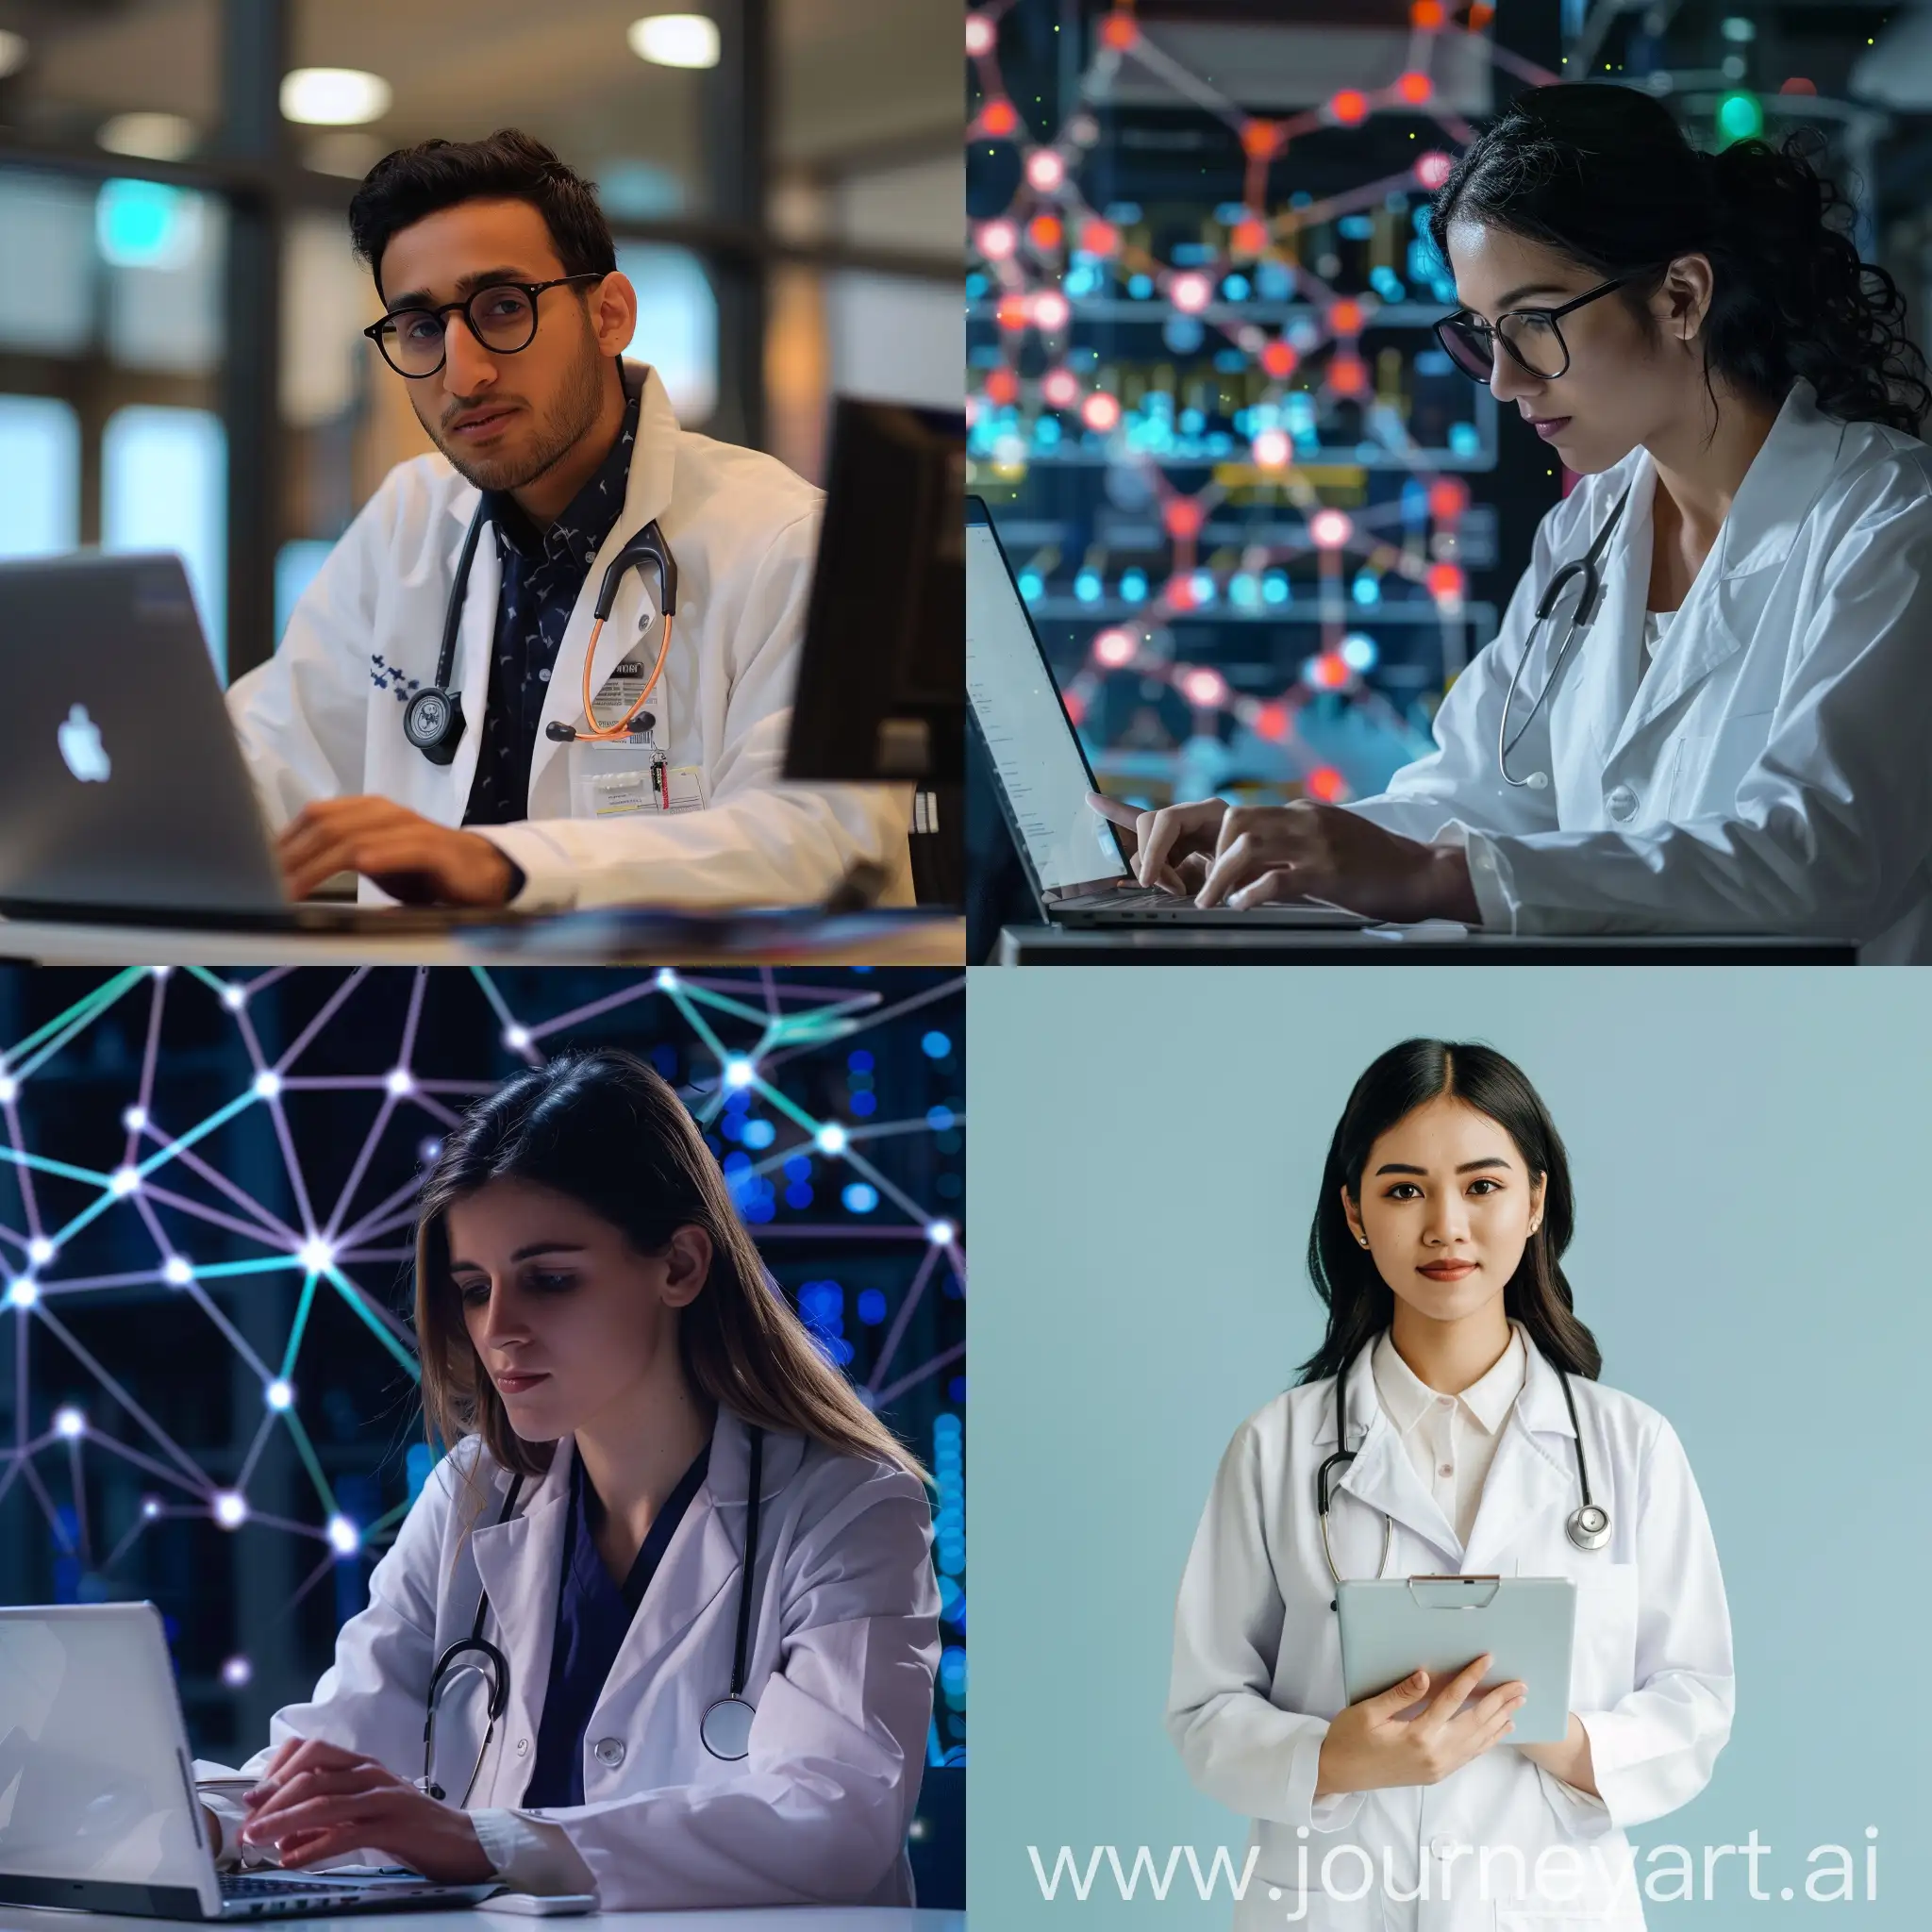 Medical-Student-Data-Analyst-LinkedIn-Background